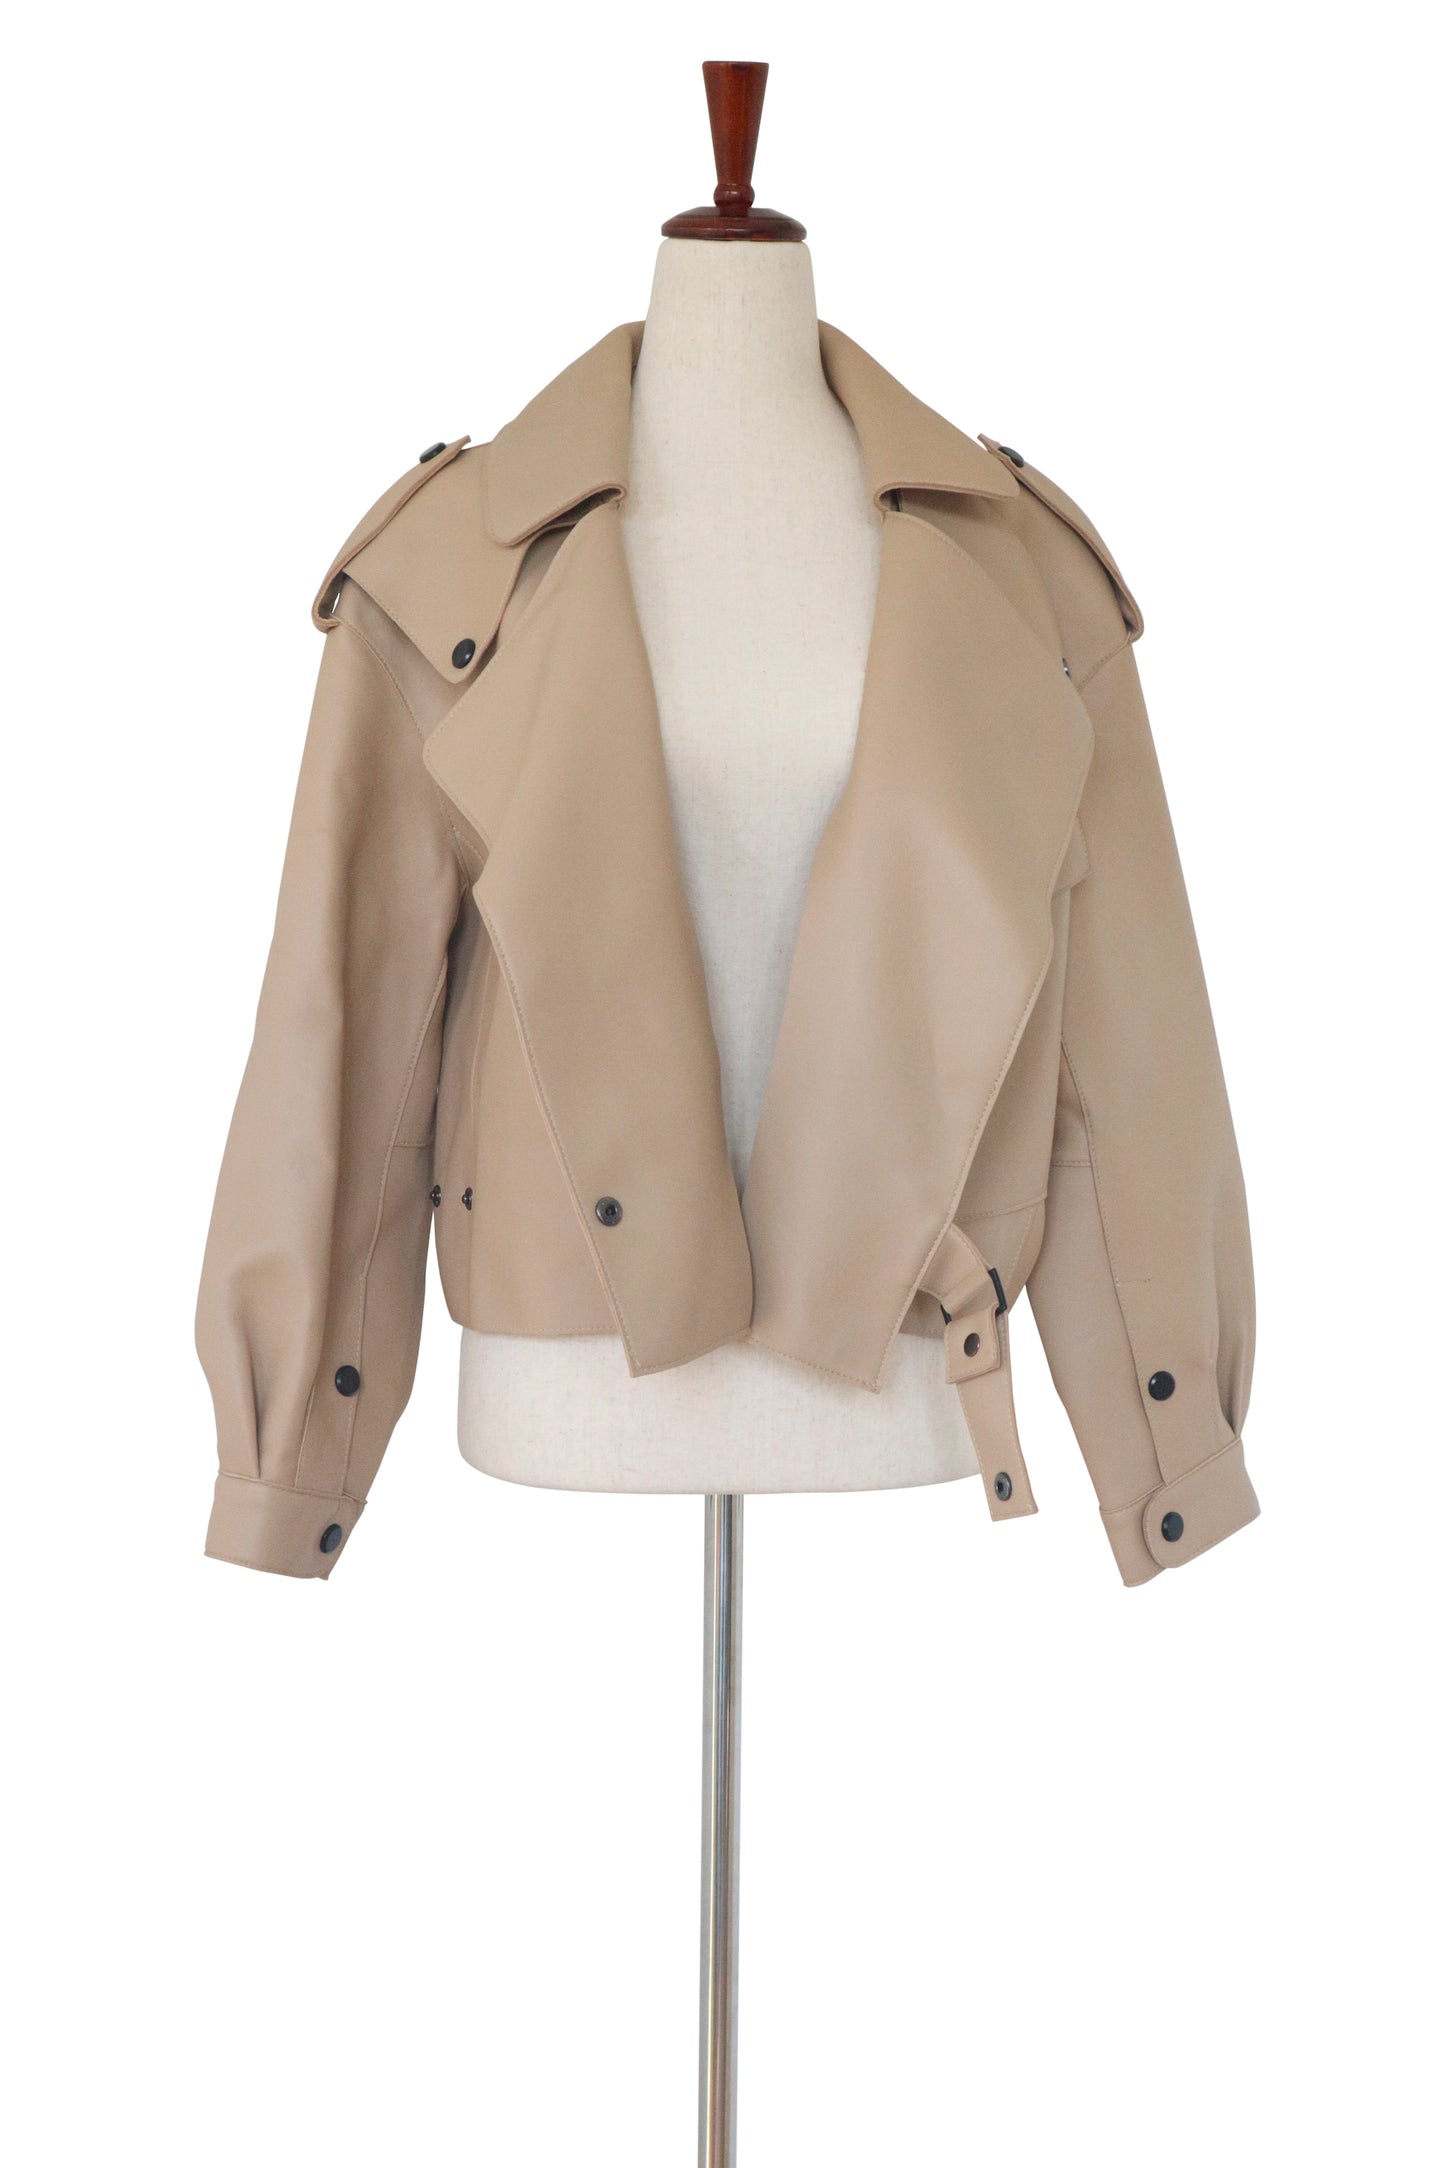 DUCIE - Leather Camel Coat - Size M